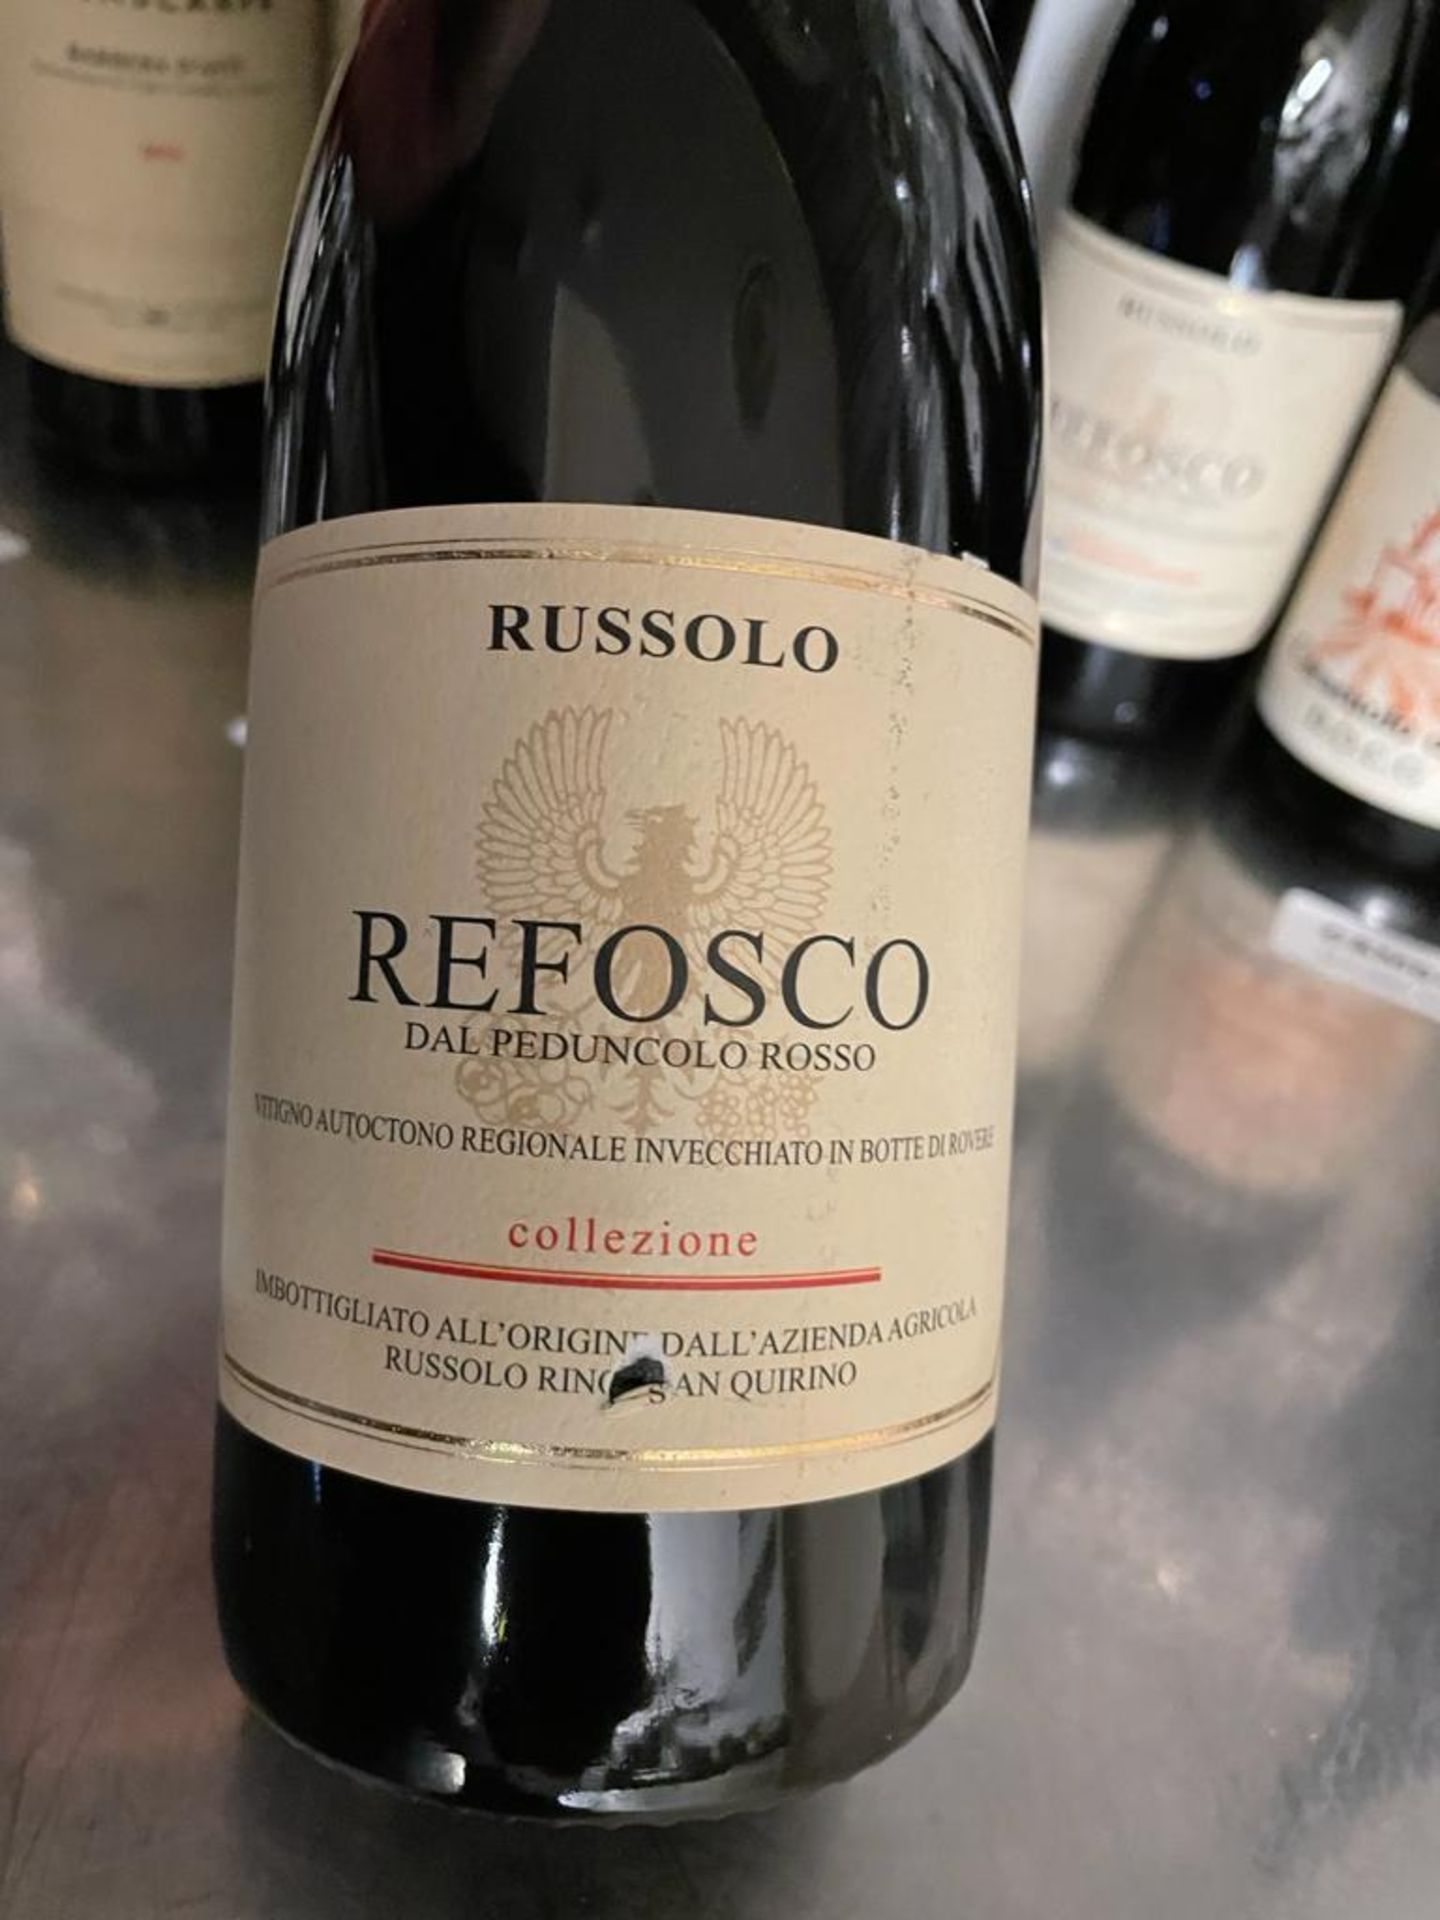 3 x Bottles Of RUSSOLO REFOSCO 2015 750ml - New/Unopened Restaurant Stock - Ref: CAM645 - CL612 - Image 3 of 3